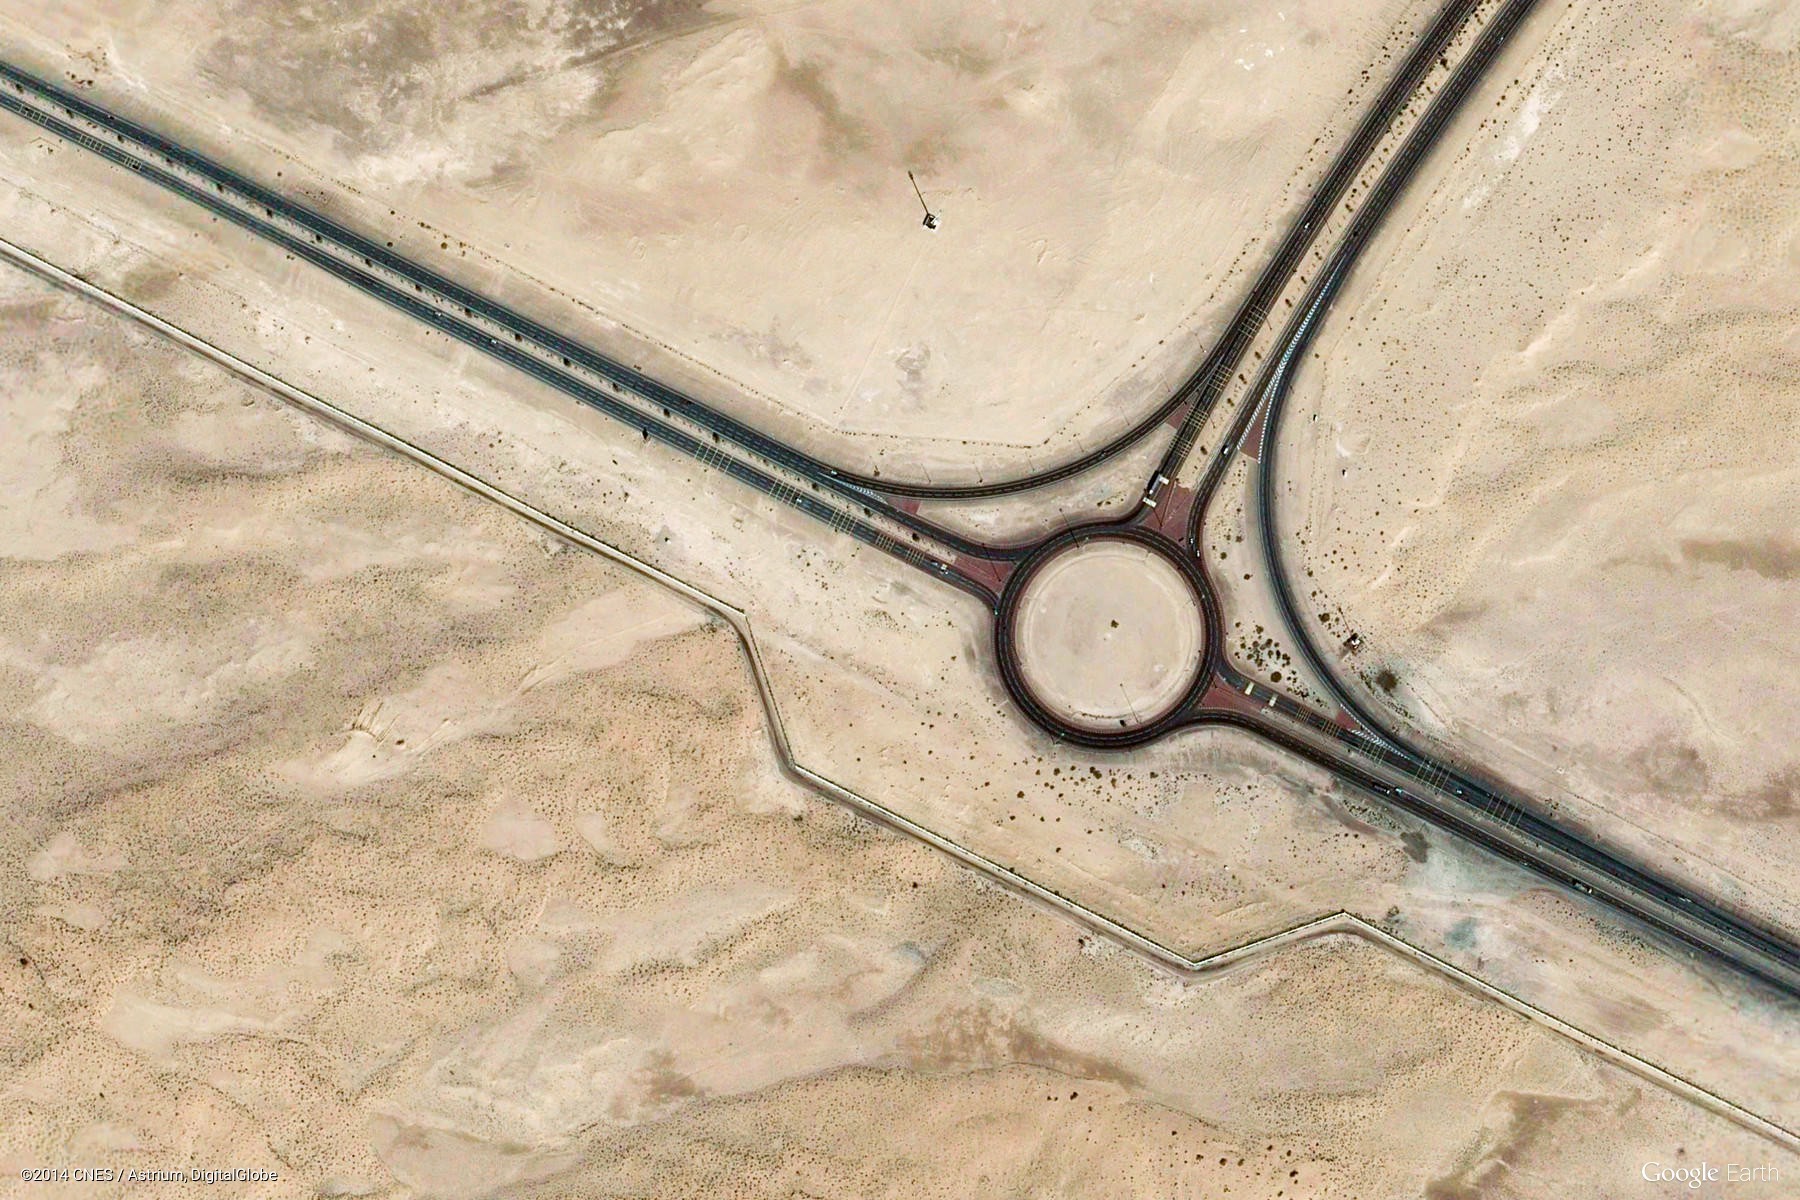 General 1800x1200 desert roundabouts aerial view Google road beige landscape